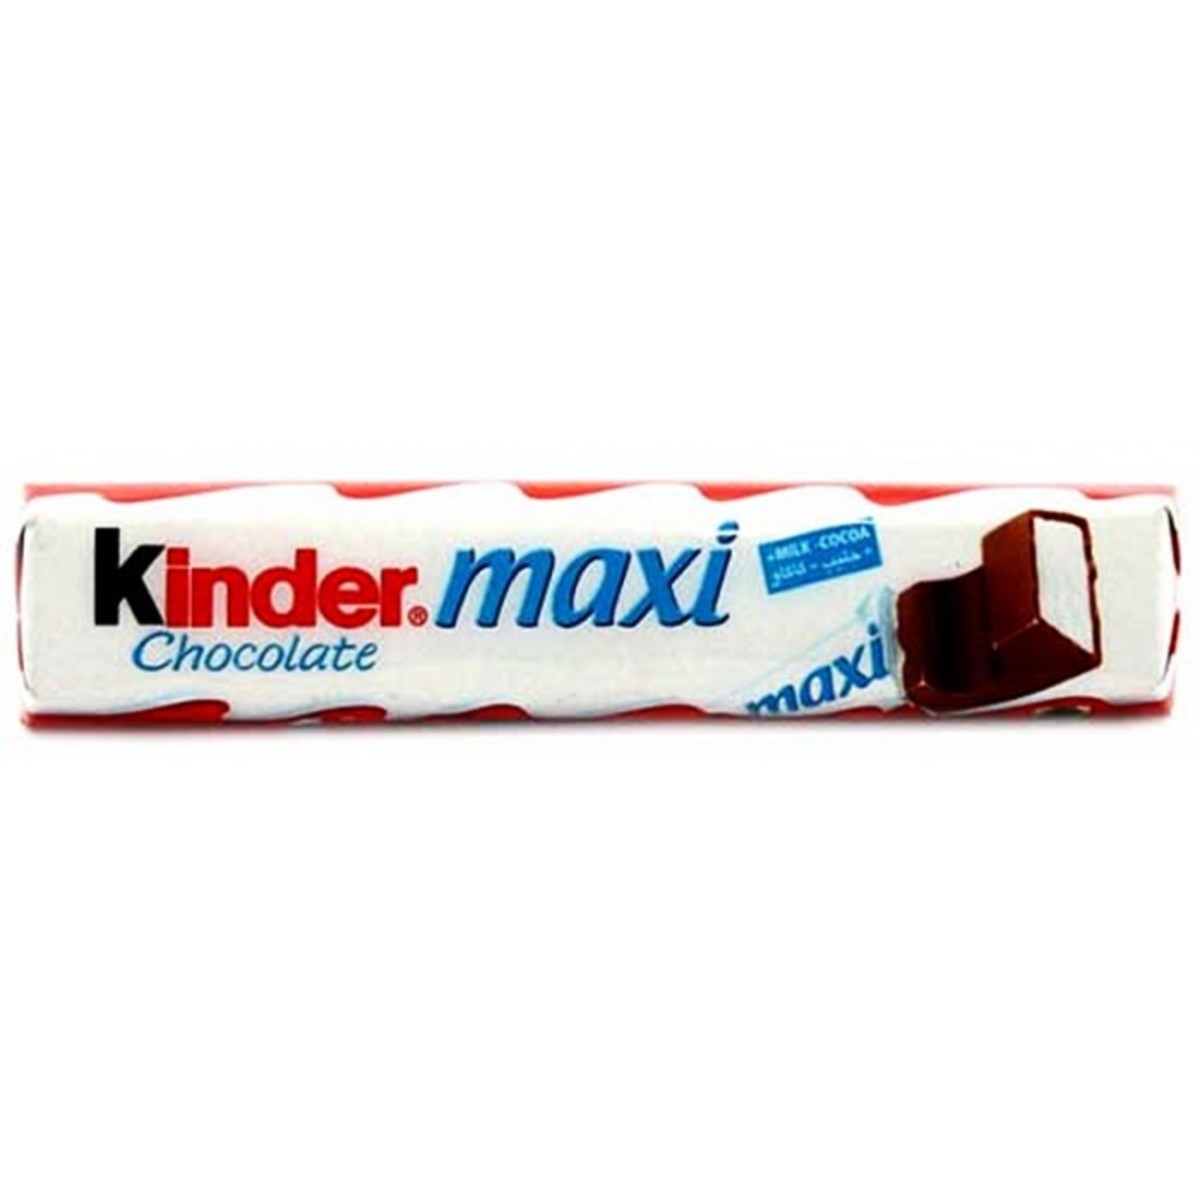 Kinder chocolate maxi 21g